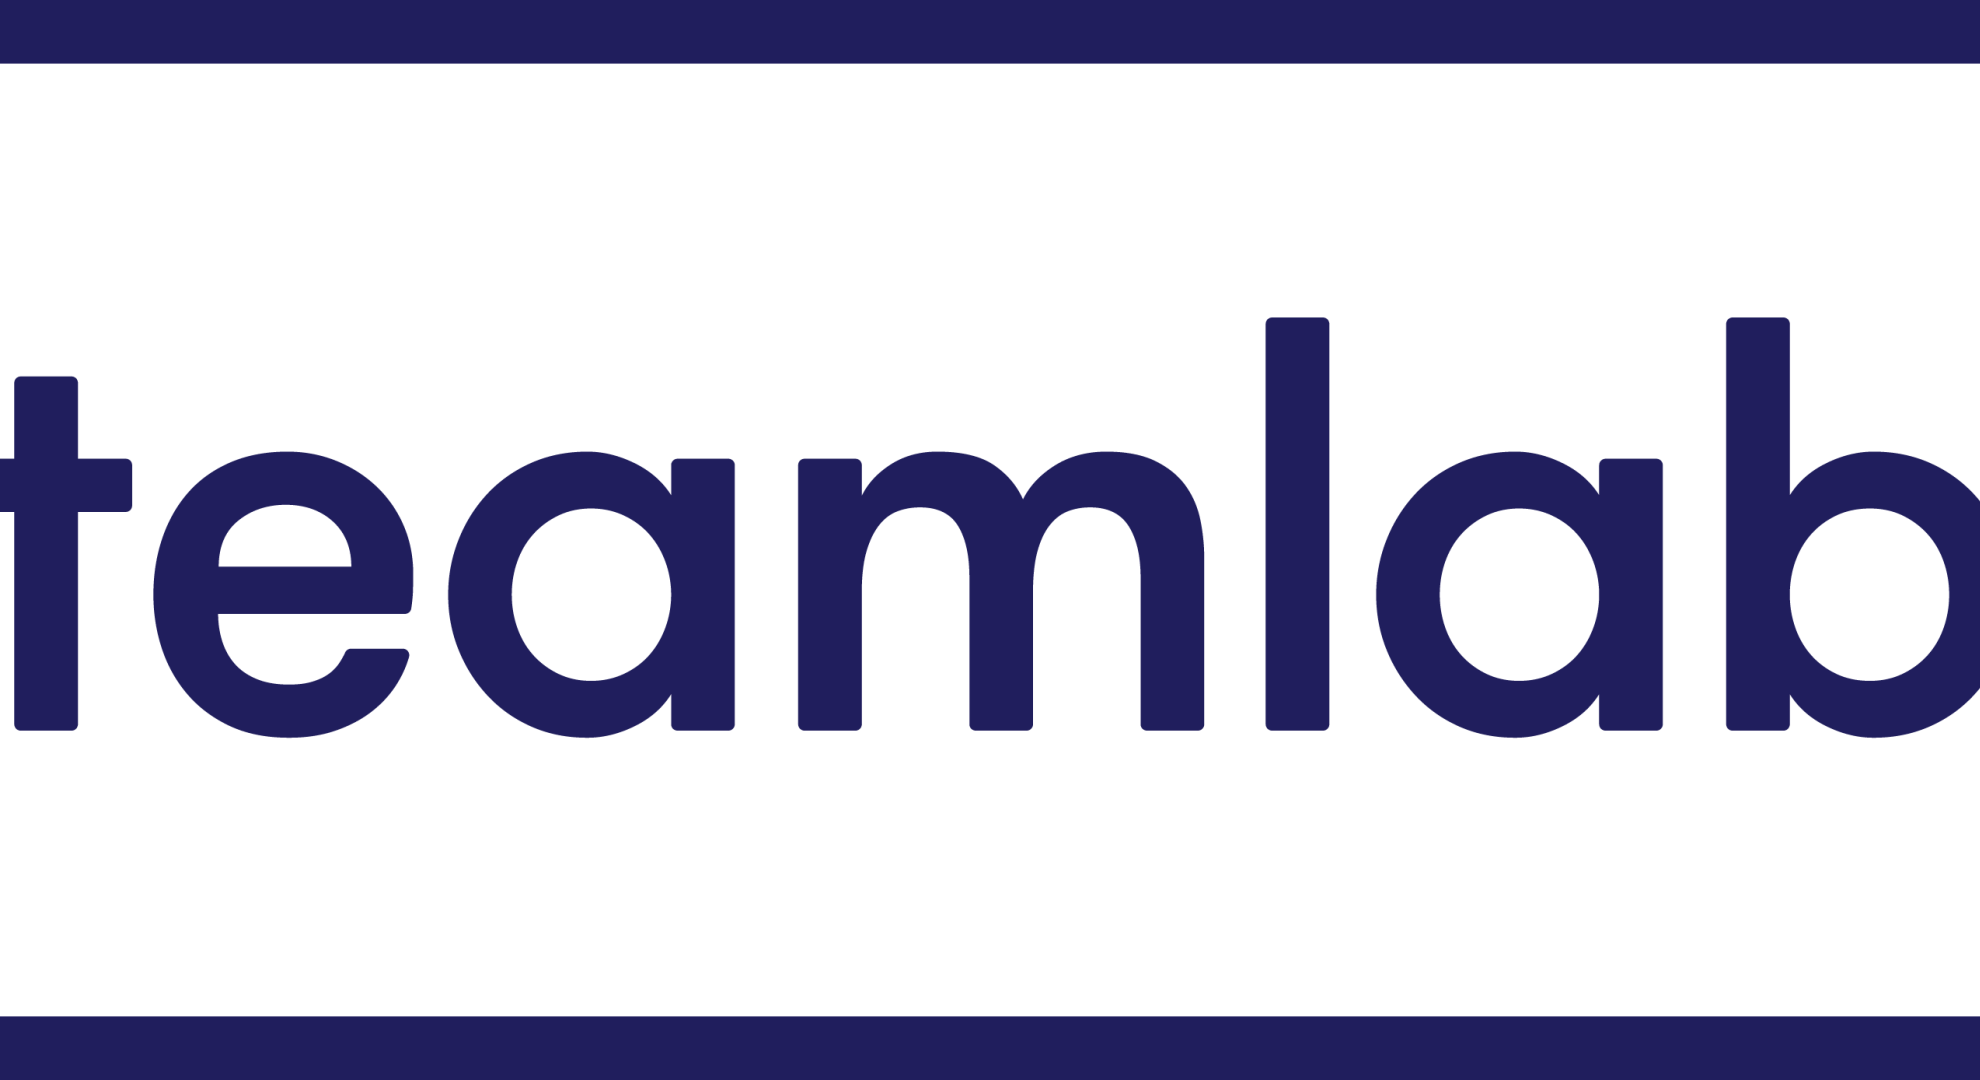 steamlabs logo